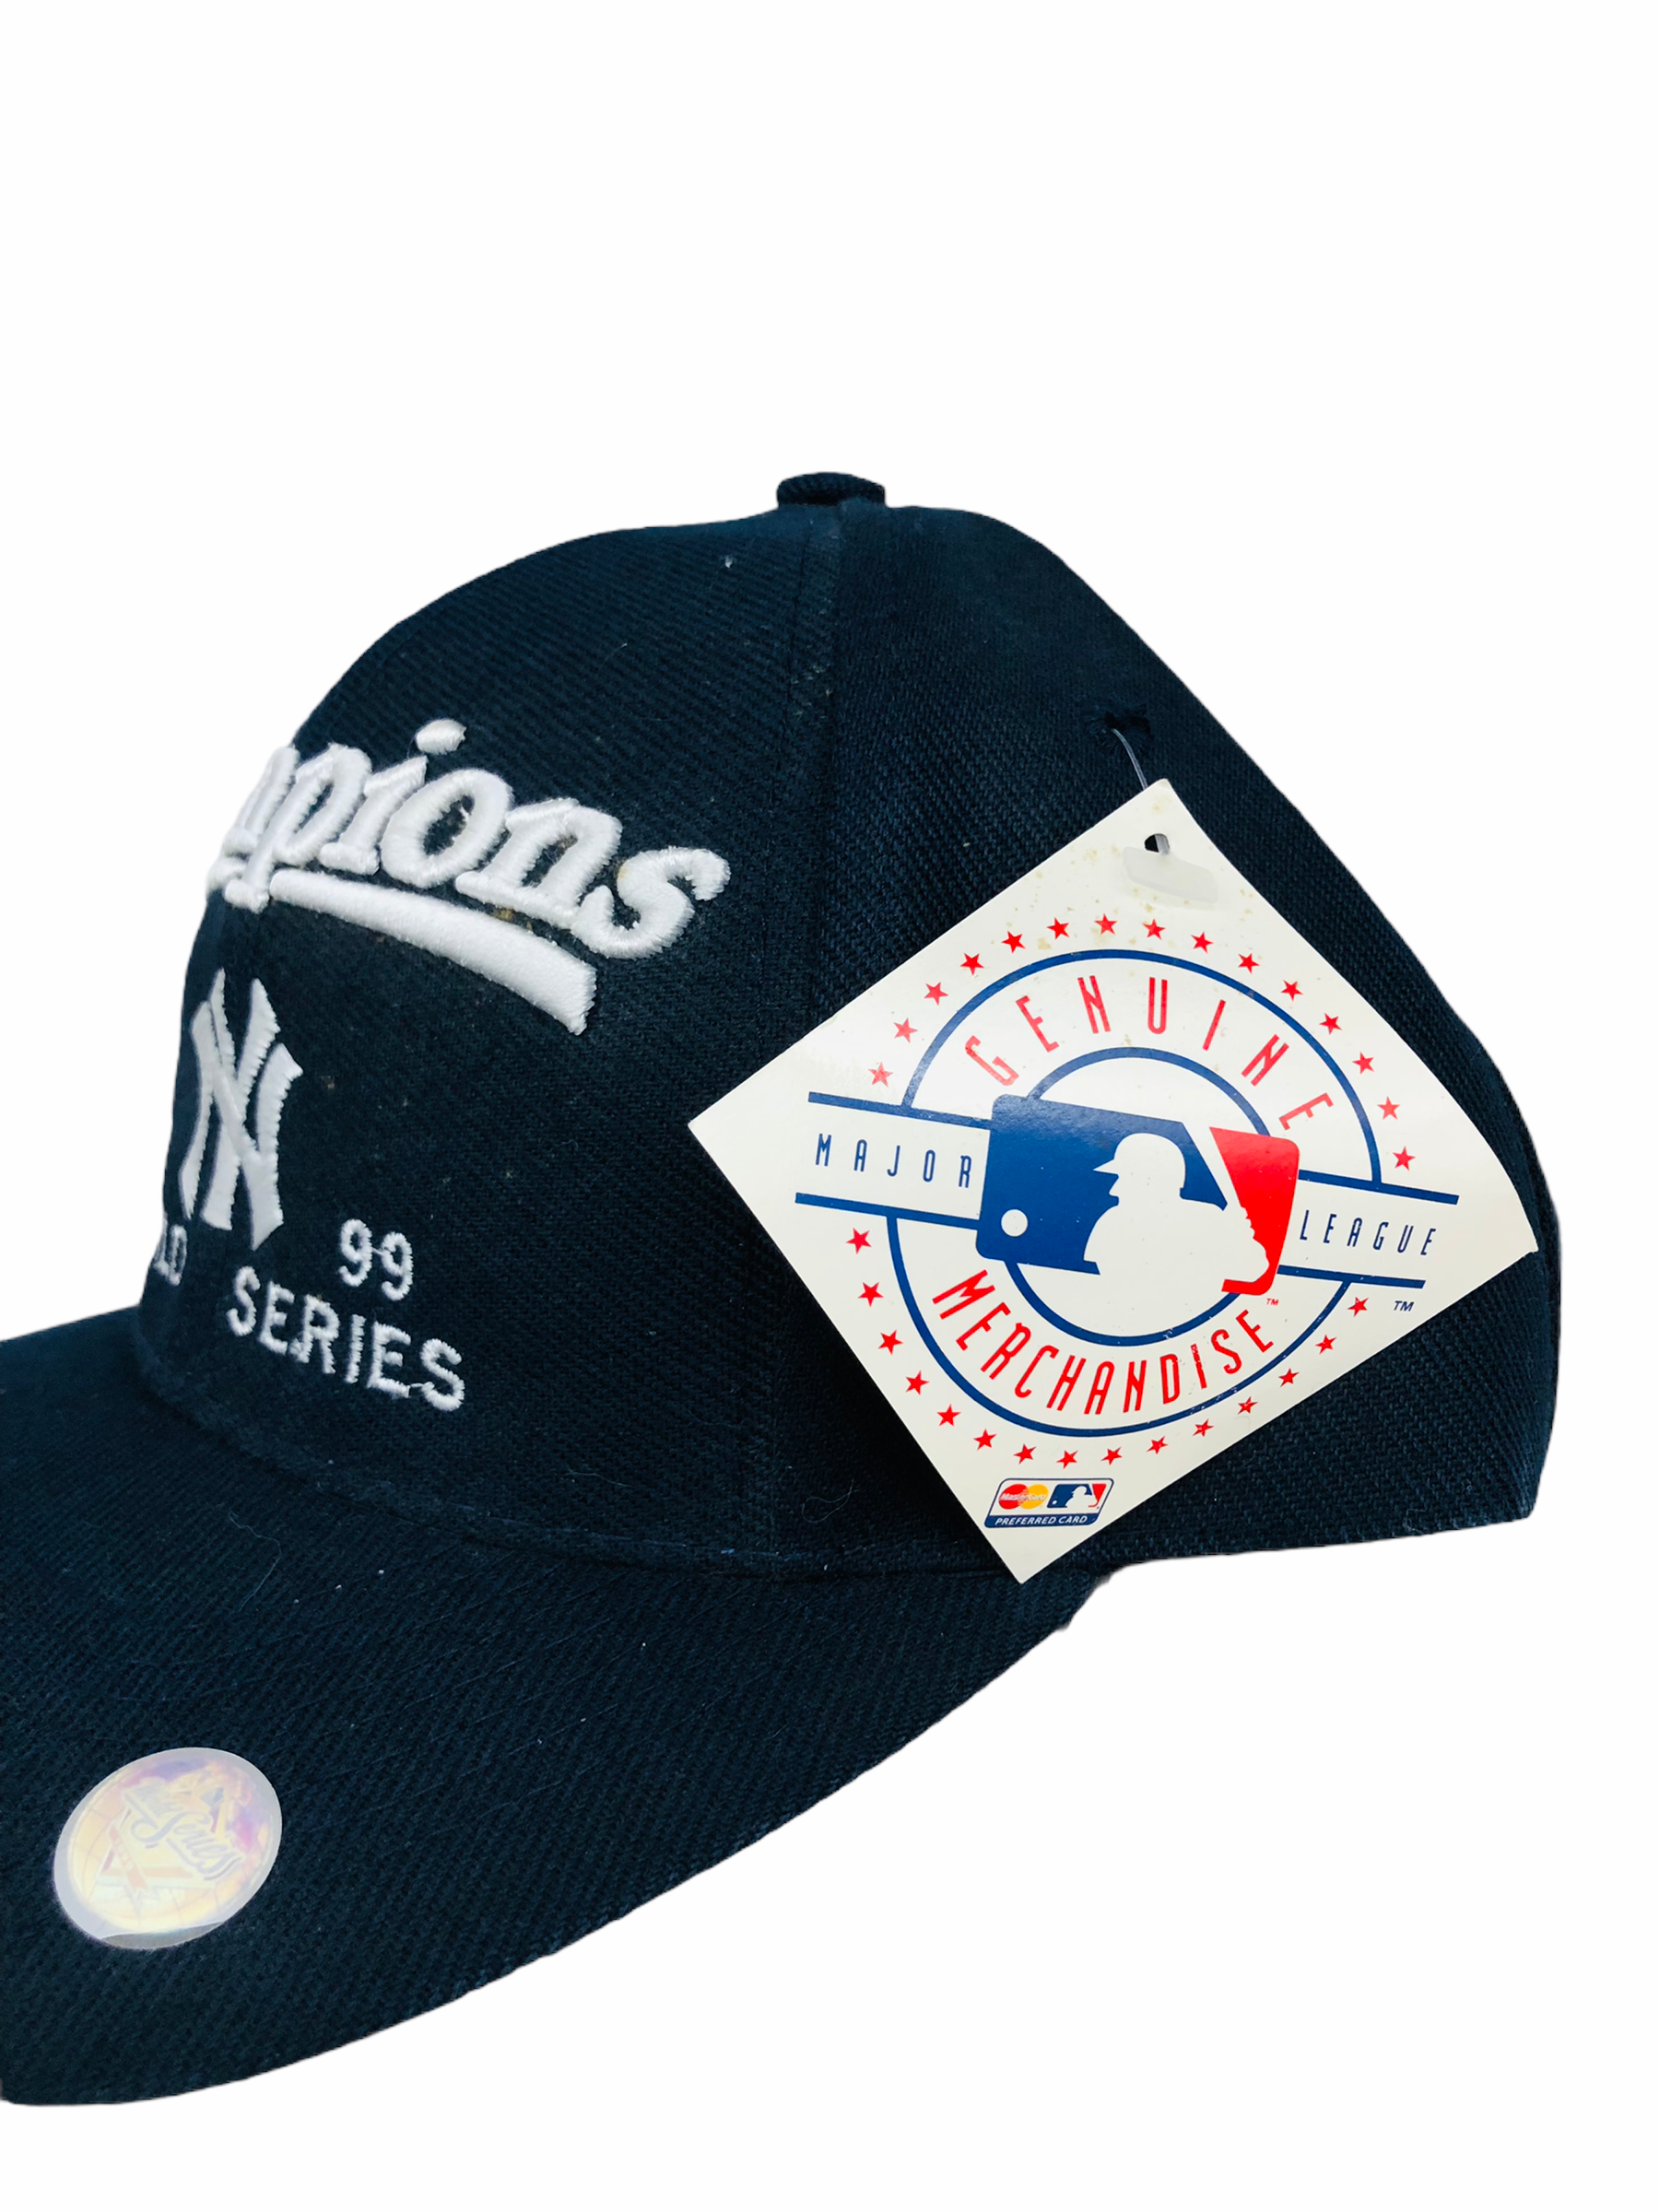 00' World Series Champions New York Yankees Champions Vintage T